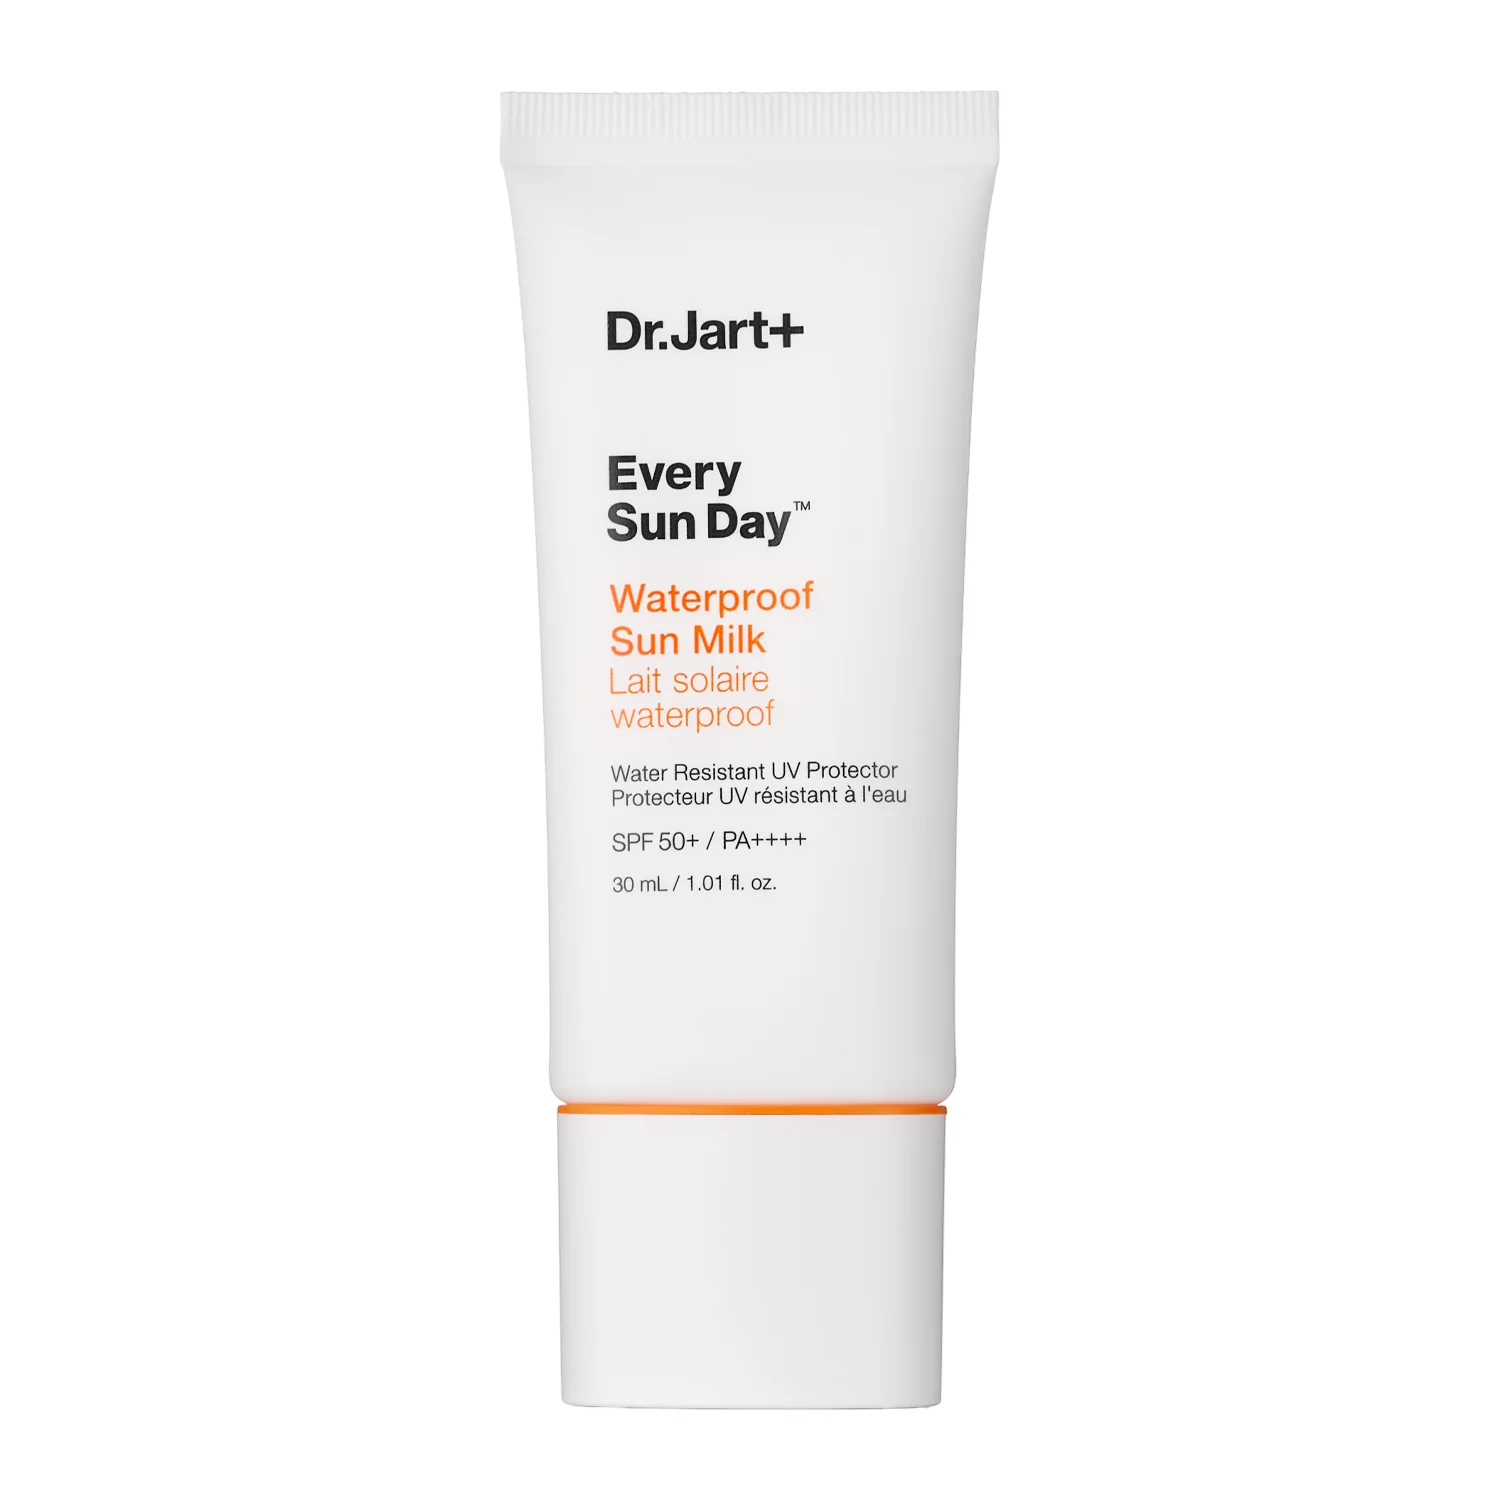 Dr.Jart+ - Every Sun Day Waterproof Sun Milk SPF 50+/PA++++ - Водостойкое солнцезащитное молочко - 30ml 